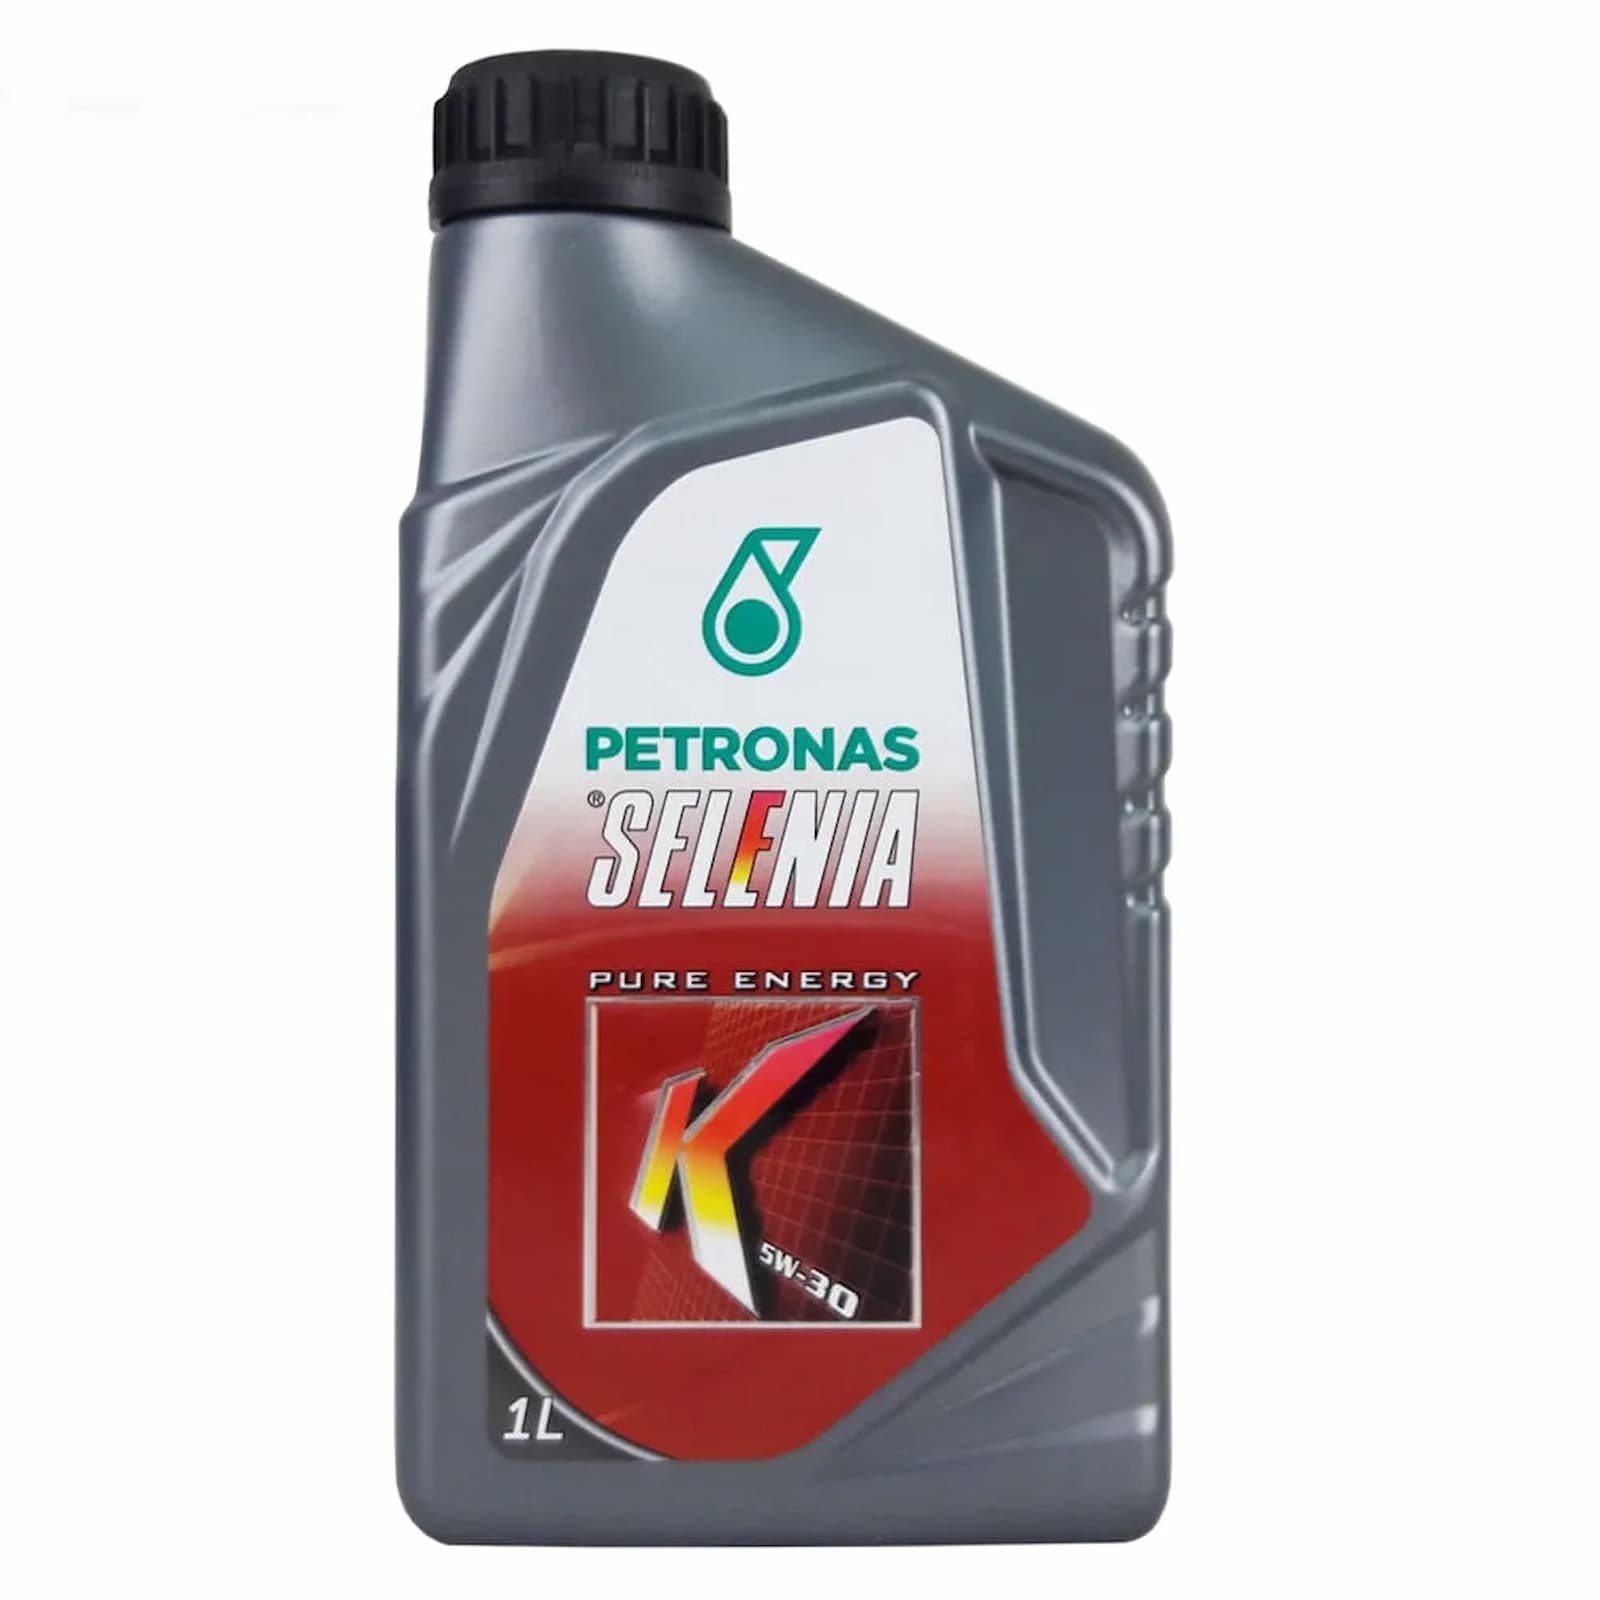 Petronas Selenia K 5w30